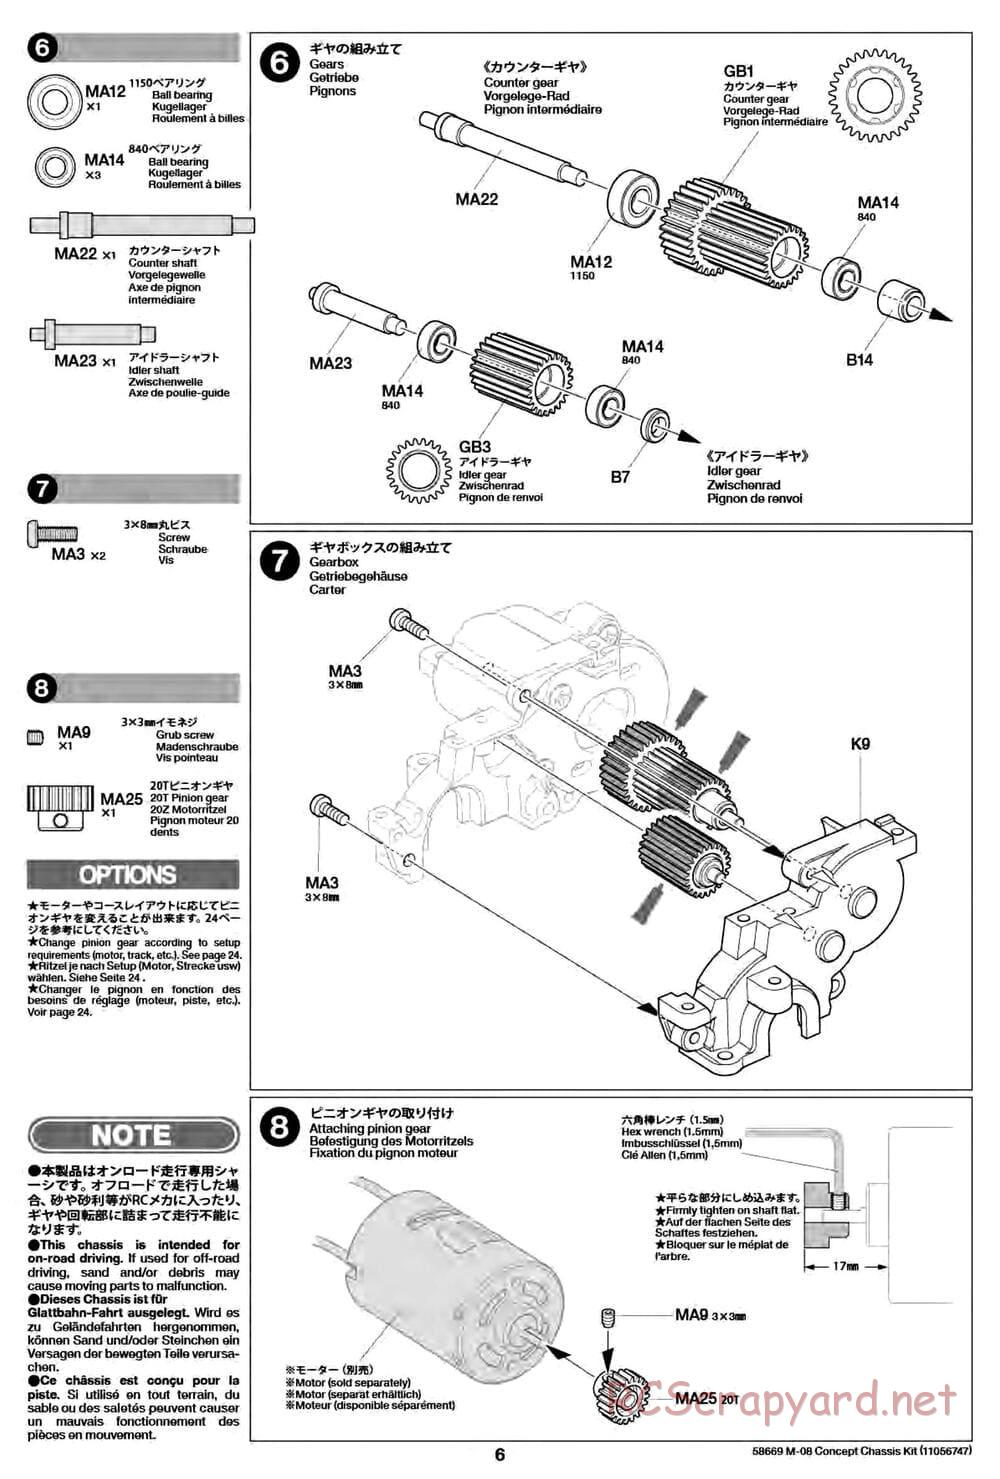 Tamiya - M-08 Concept Chassis - Manual - Page 6